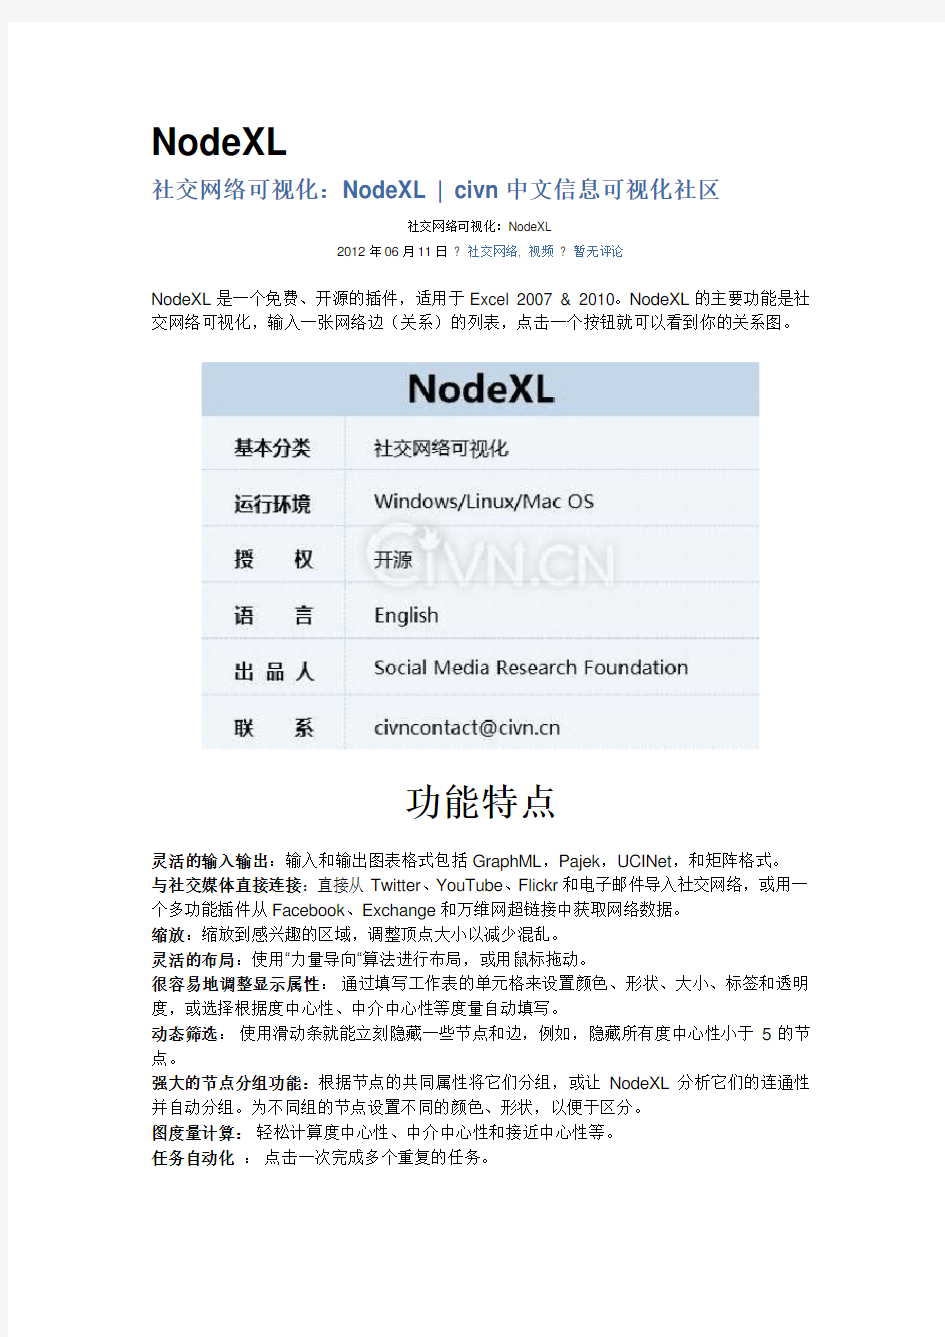 NodeXL中文介绍